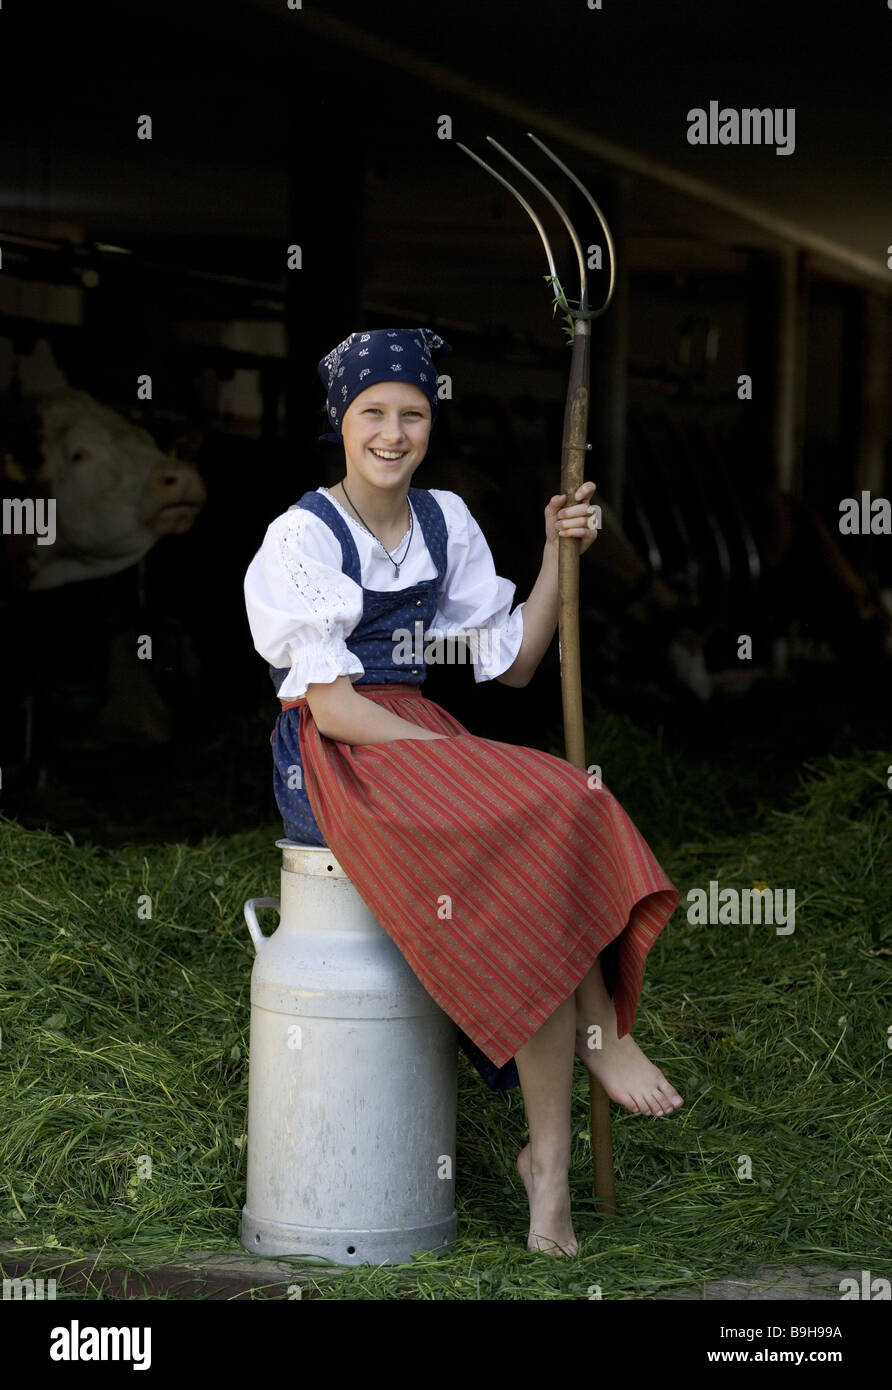 http://c8.alamy.com/comp/B9H99A/girl-farm-barnstable-feeding-cows-13-years-work-task-barefoot-farm-B9H99A.jpg